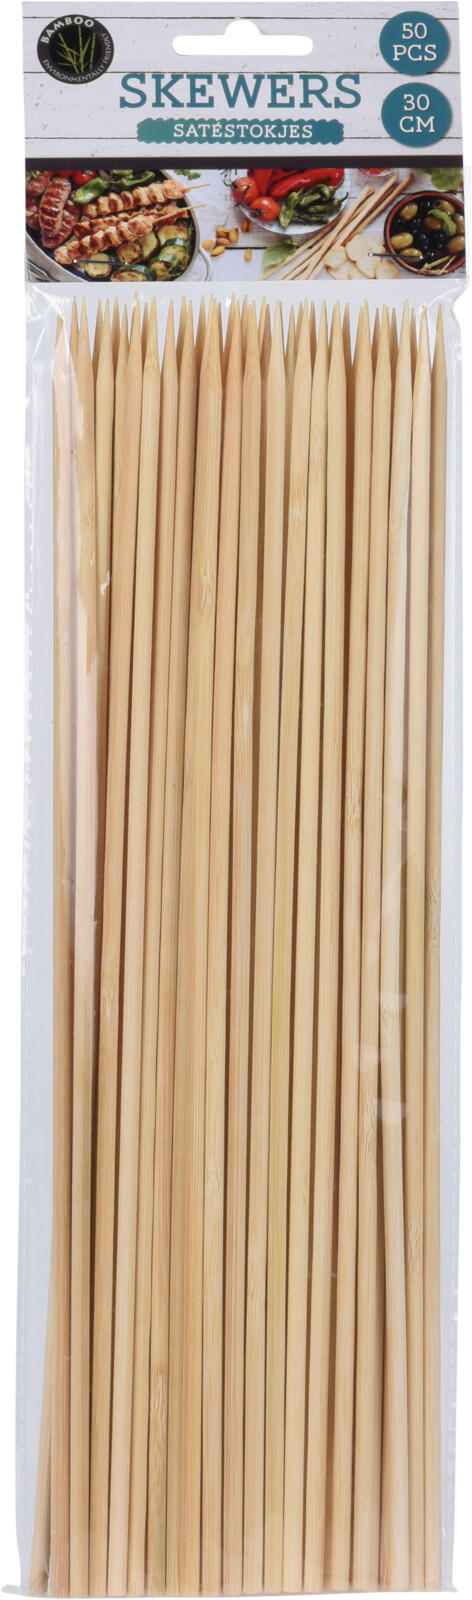 špejle bambus 30cmx4mm (50ks) 0.14 Kg MAXMIX Sklad14 386246 185